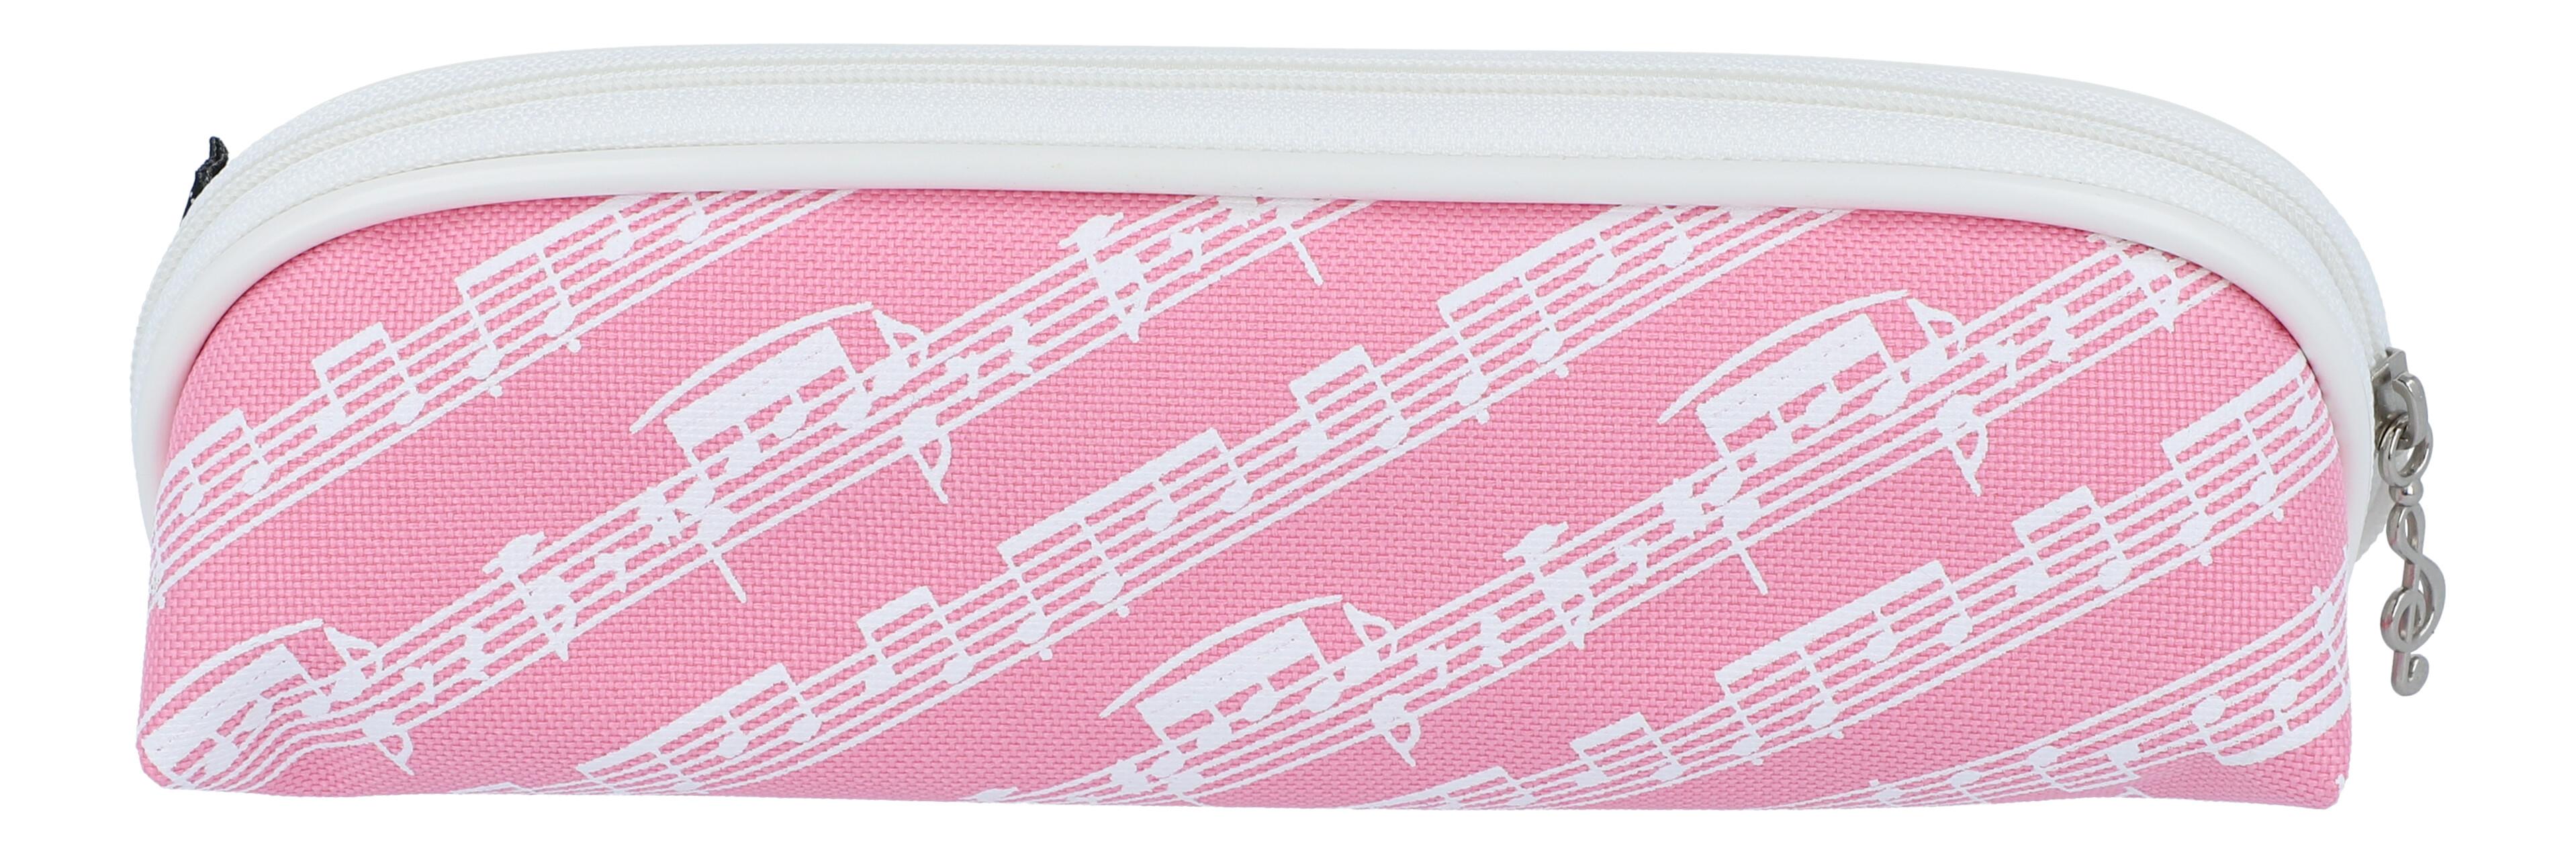 Rectangular pencil case pink